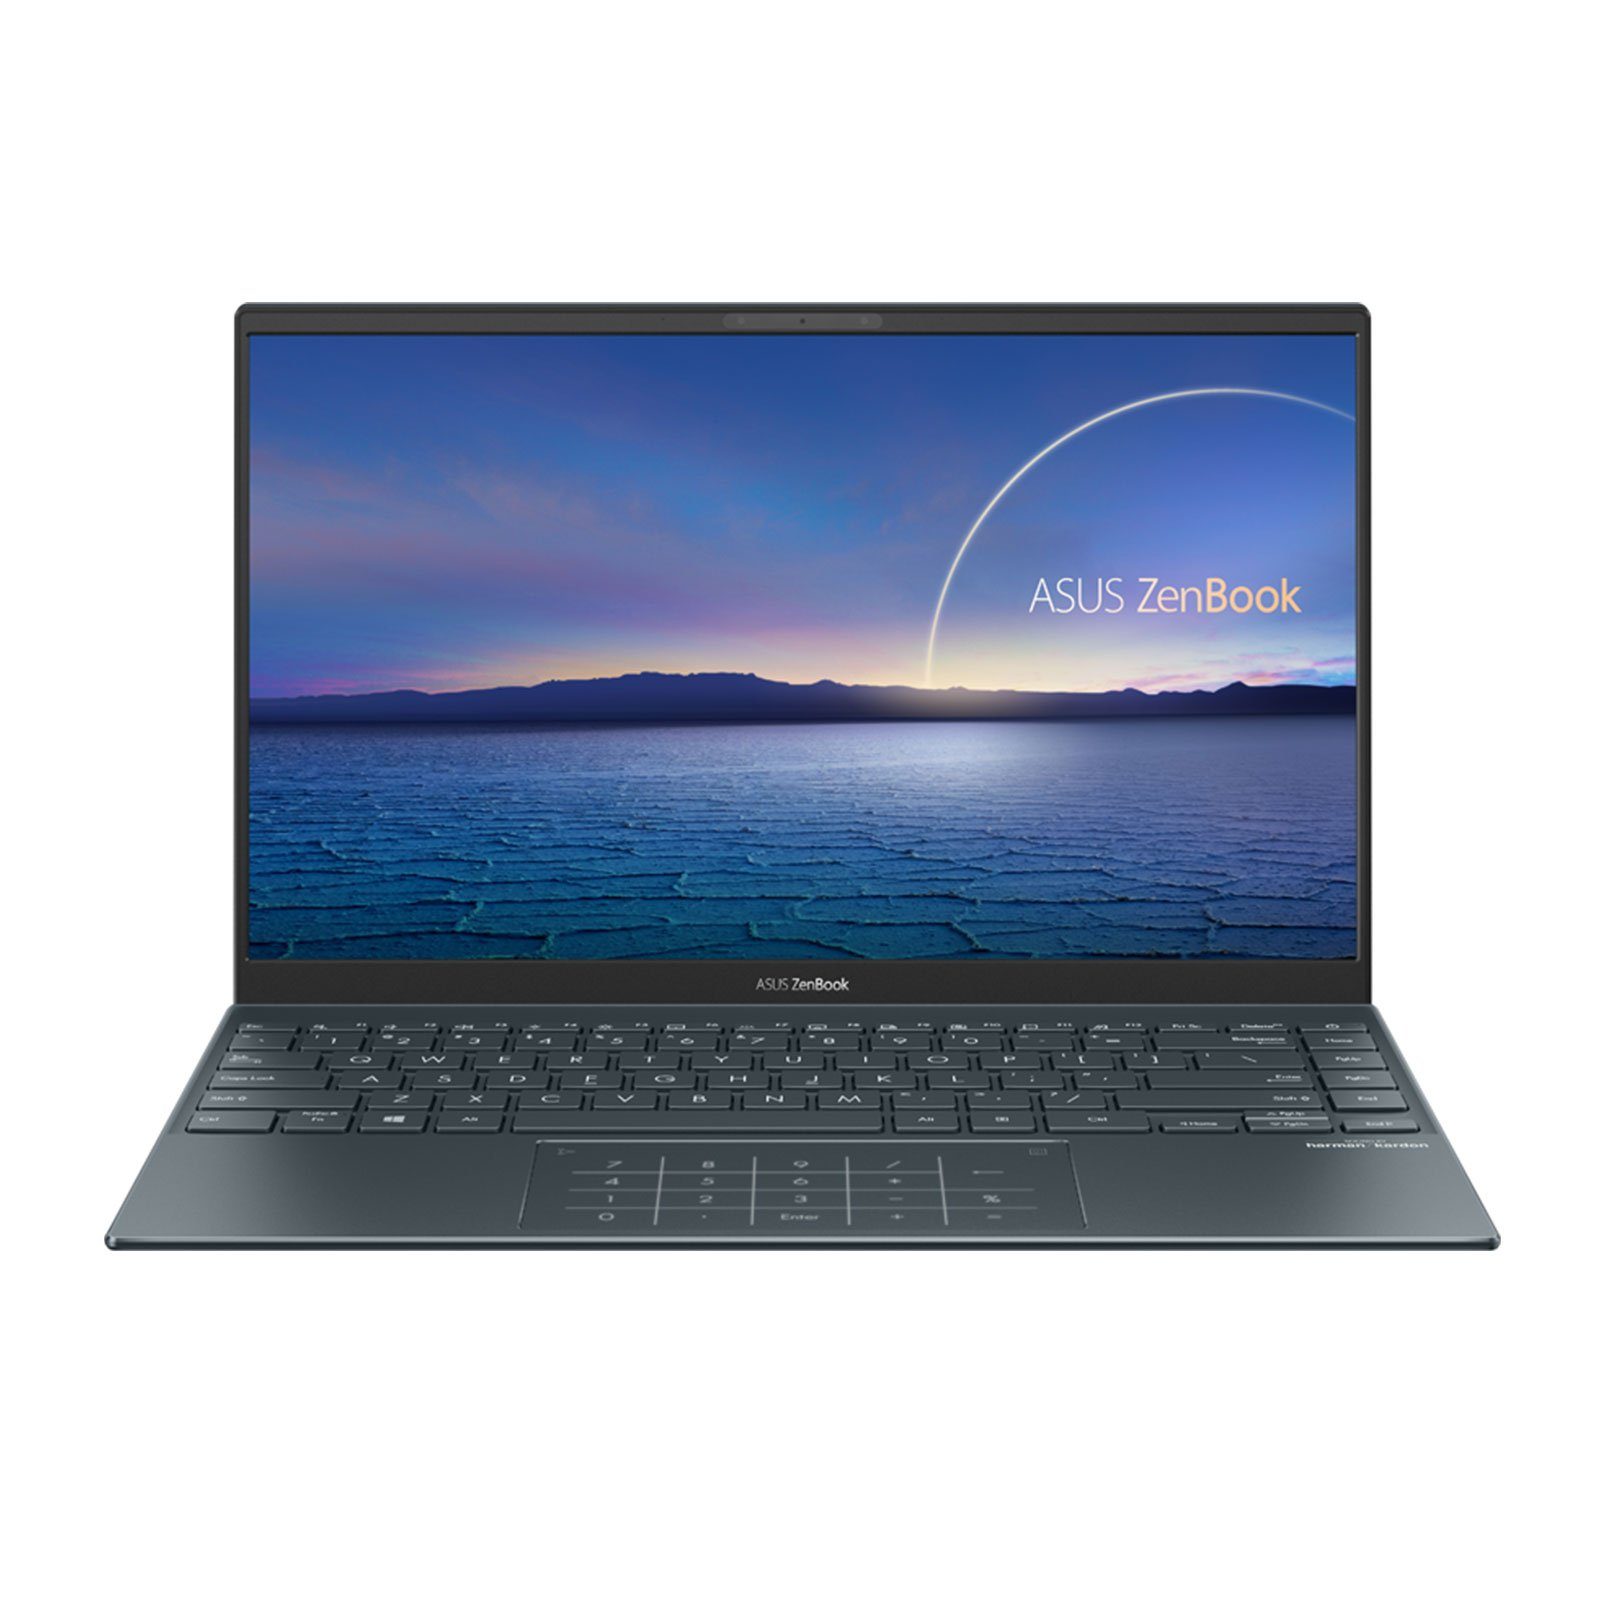 Asus ZenBook 14 UX425JA-HM094T Notebook online kaufen | OTTO